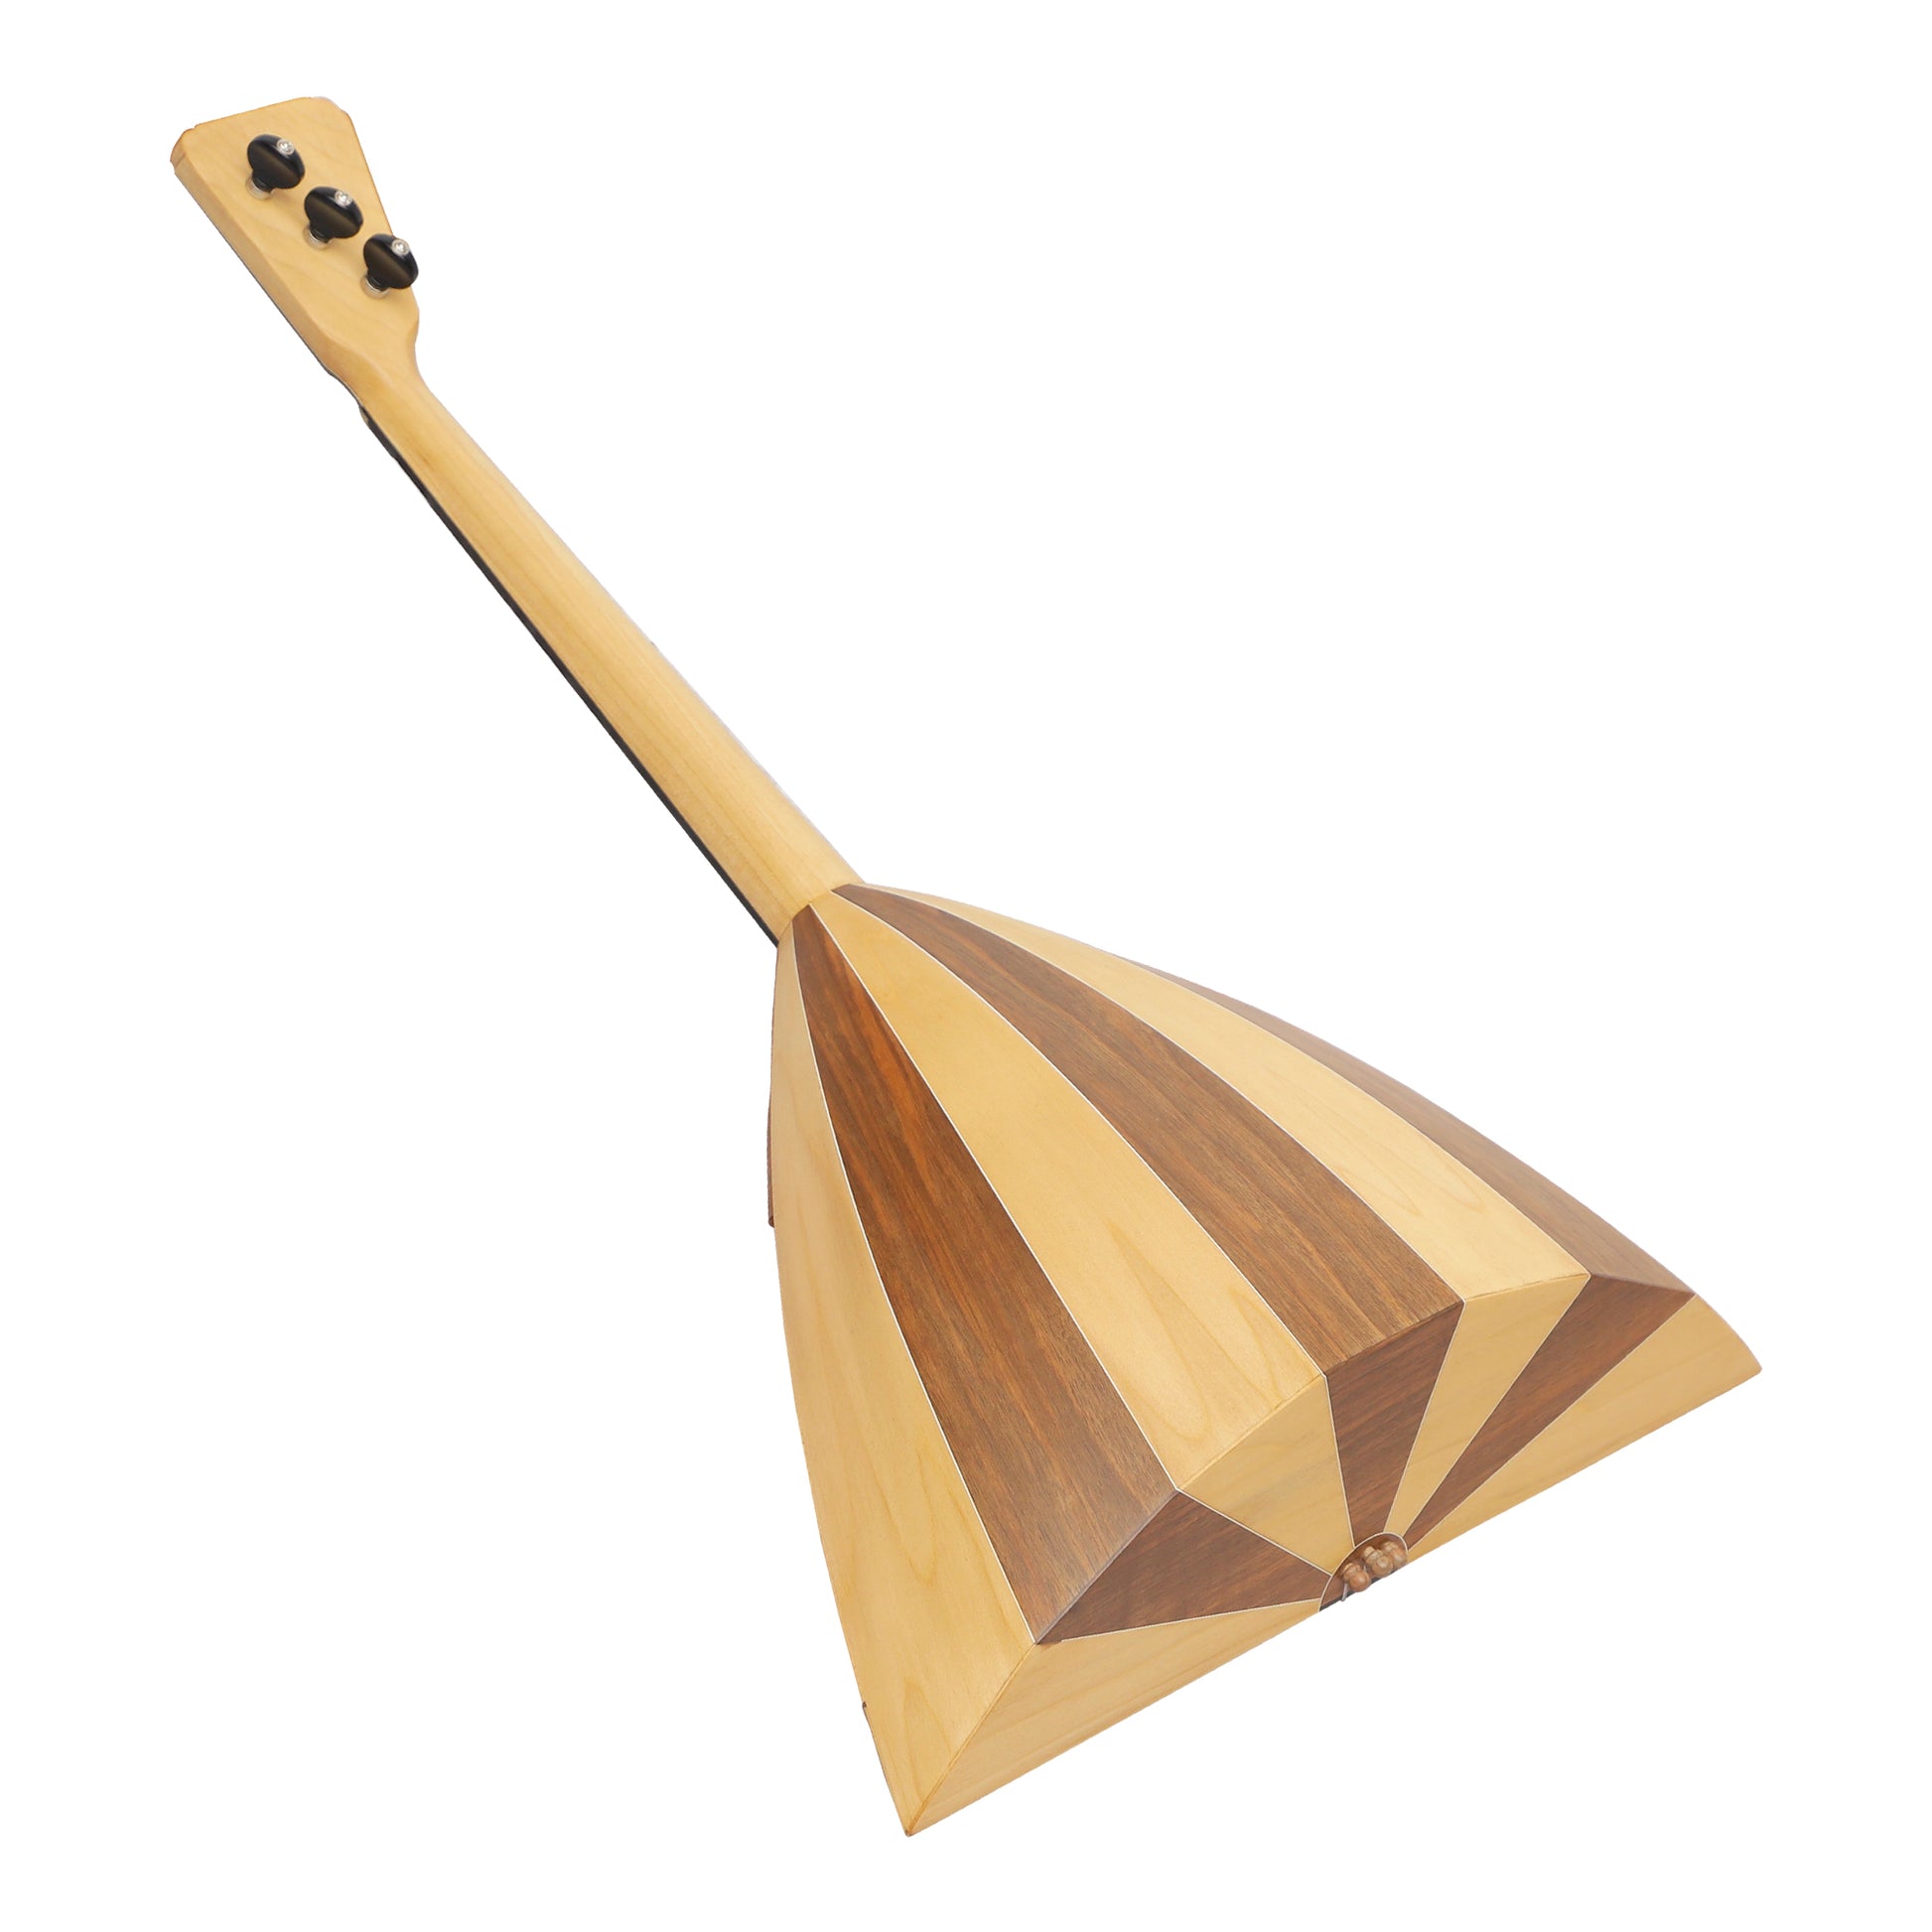 Balalaika left handed instrument